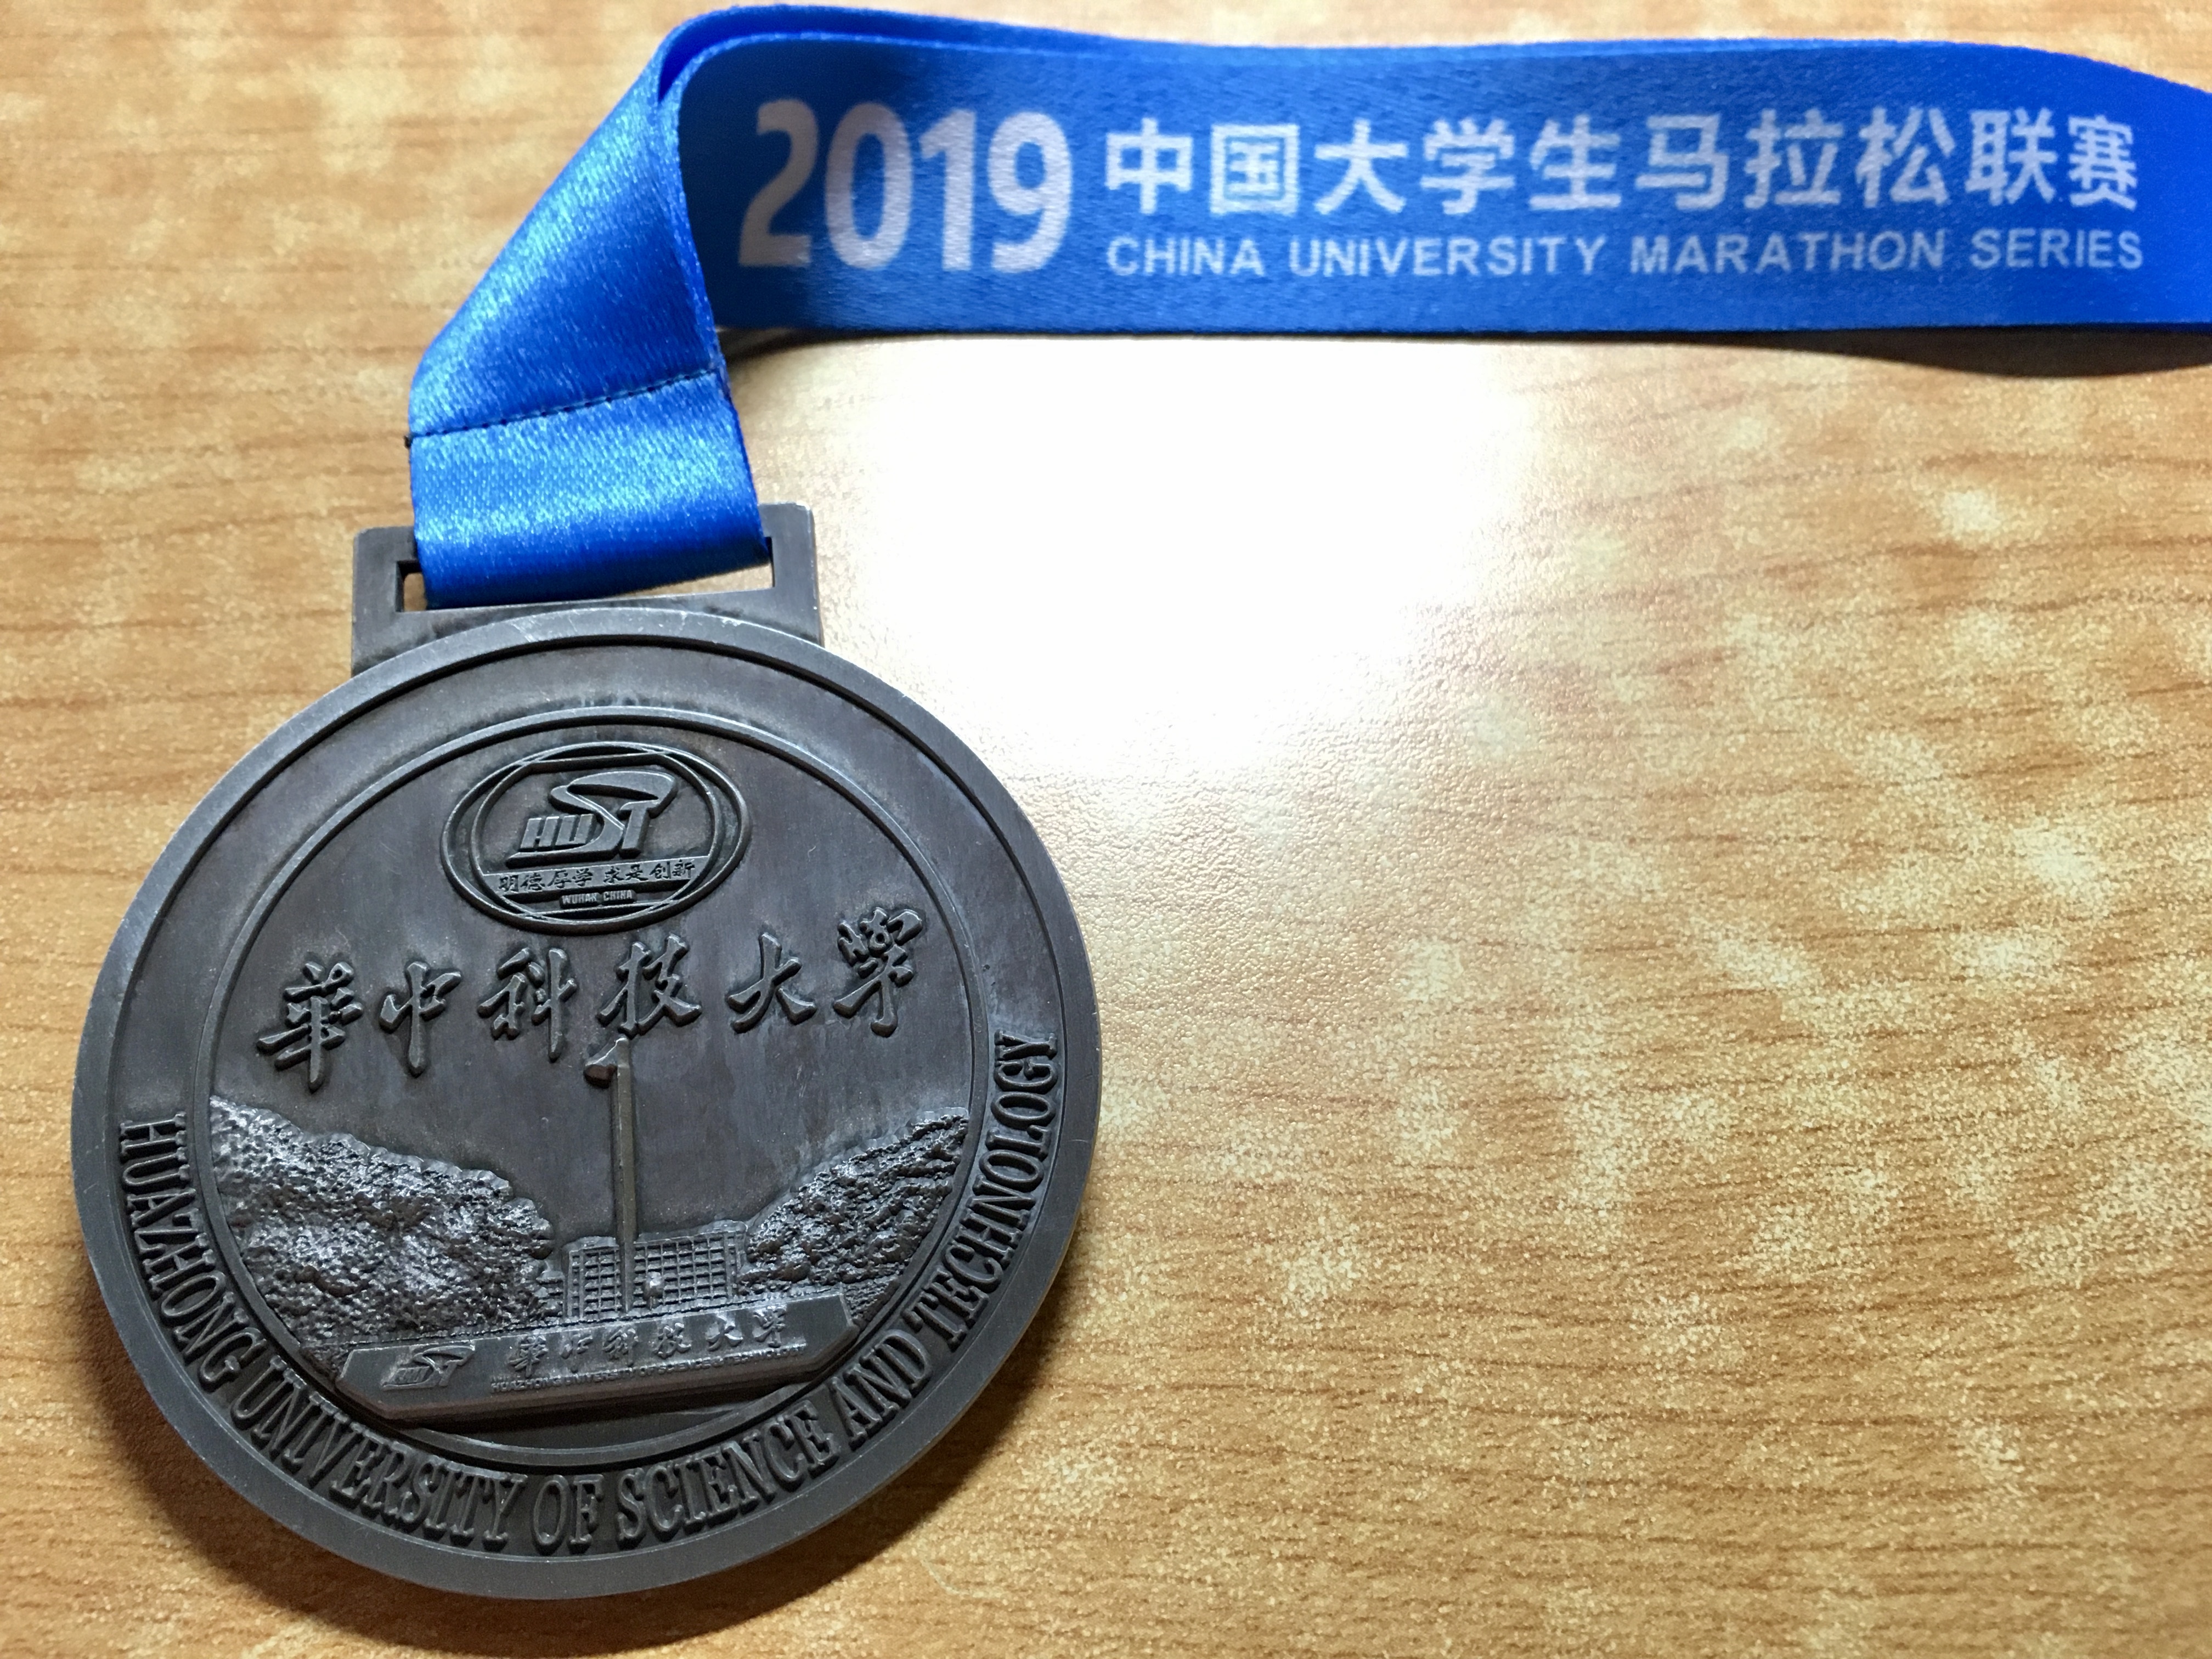 Medal for 2019 China university marathon series